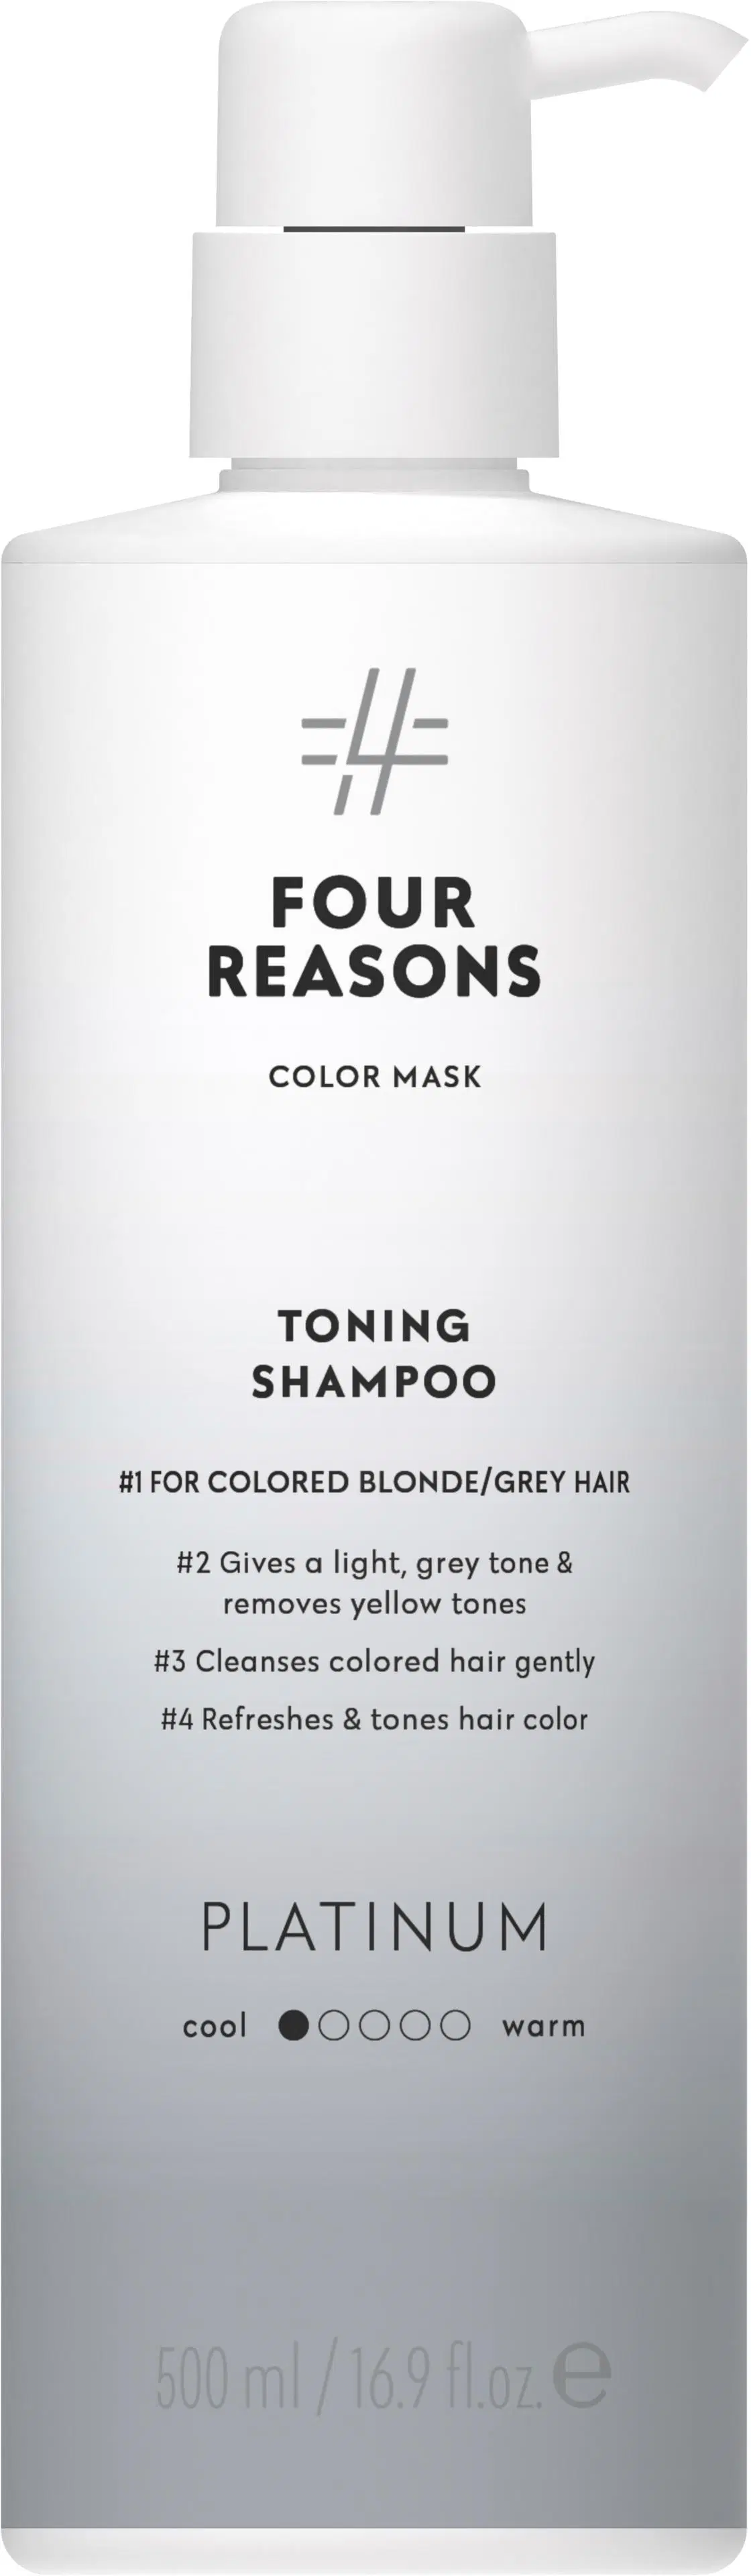 Four Reasons Color Mask Toning Shampoo Platinum 500 ml